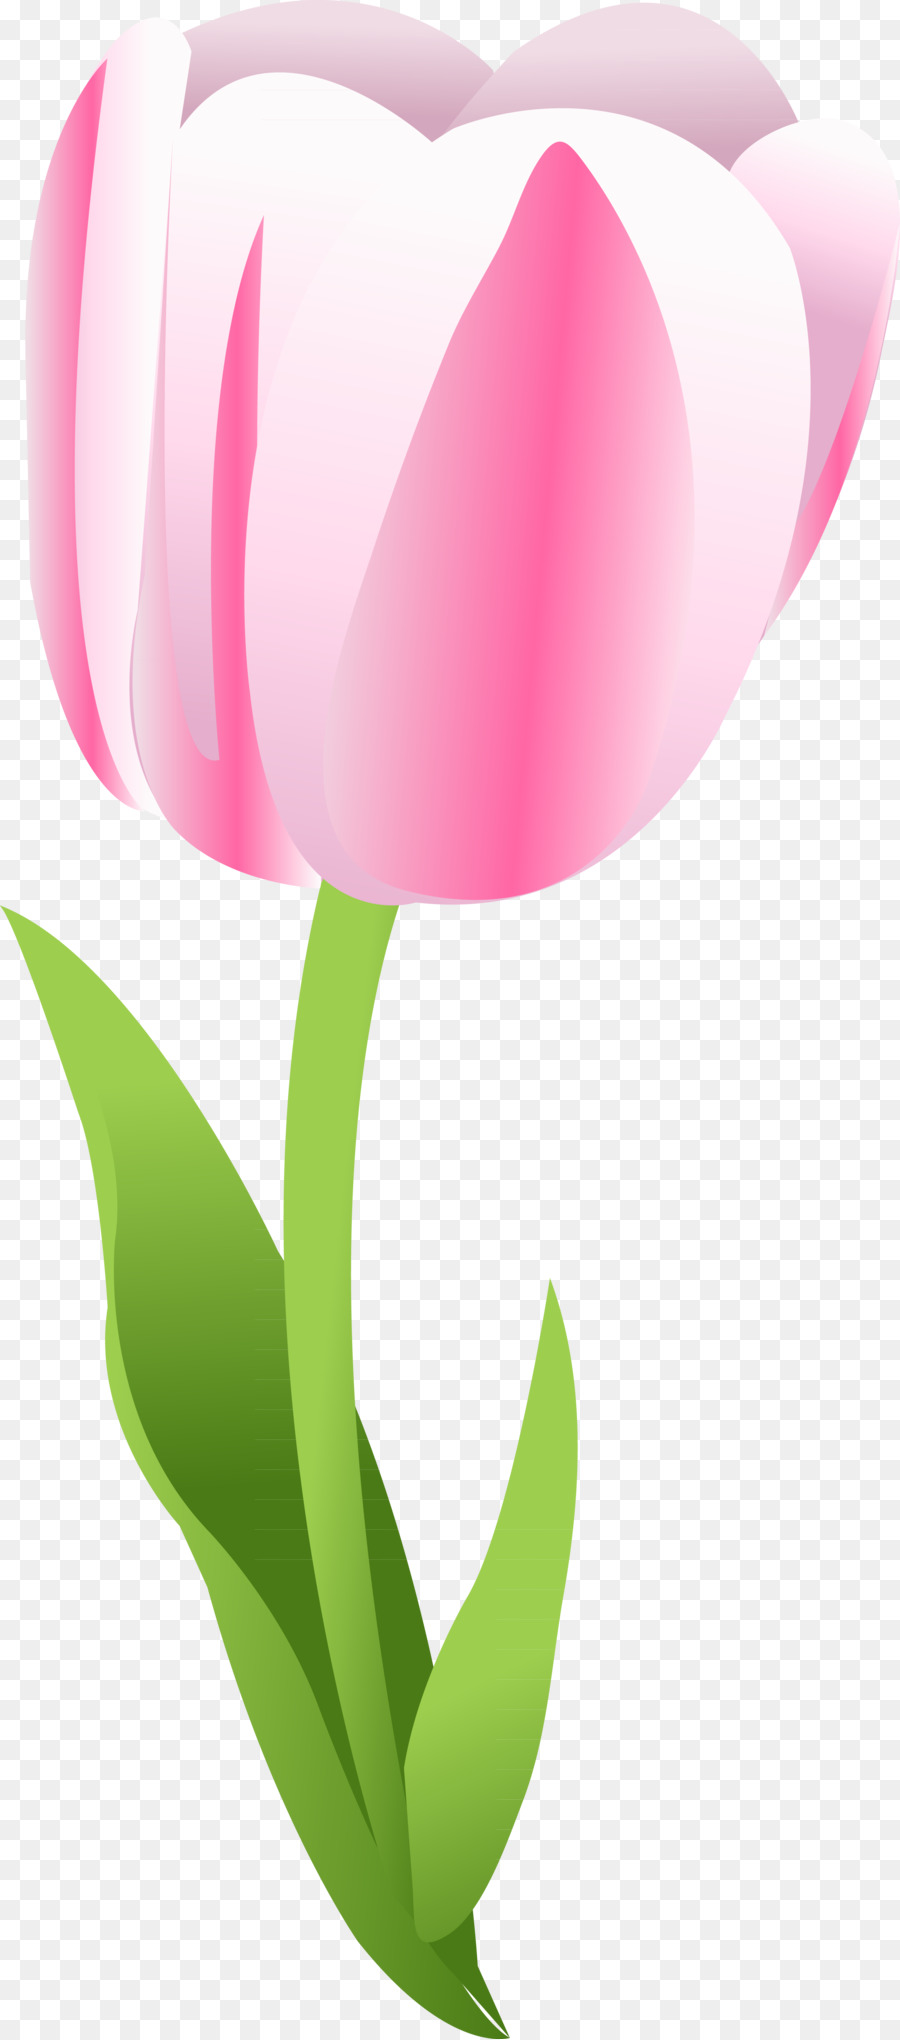 Tulpe Desktop hintergrund clipart - Tulip